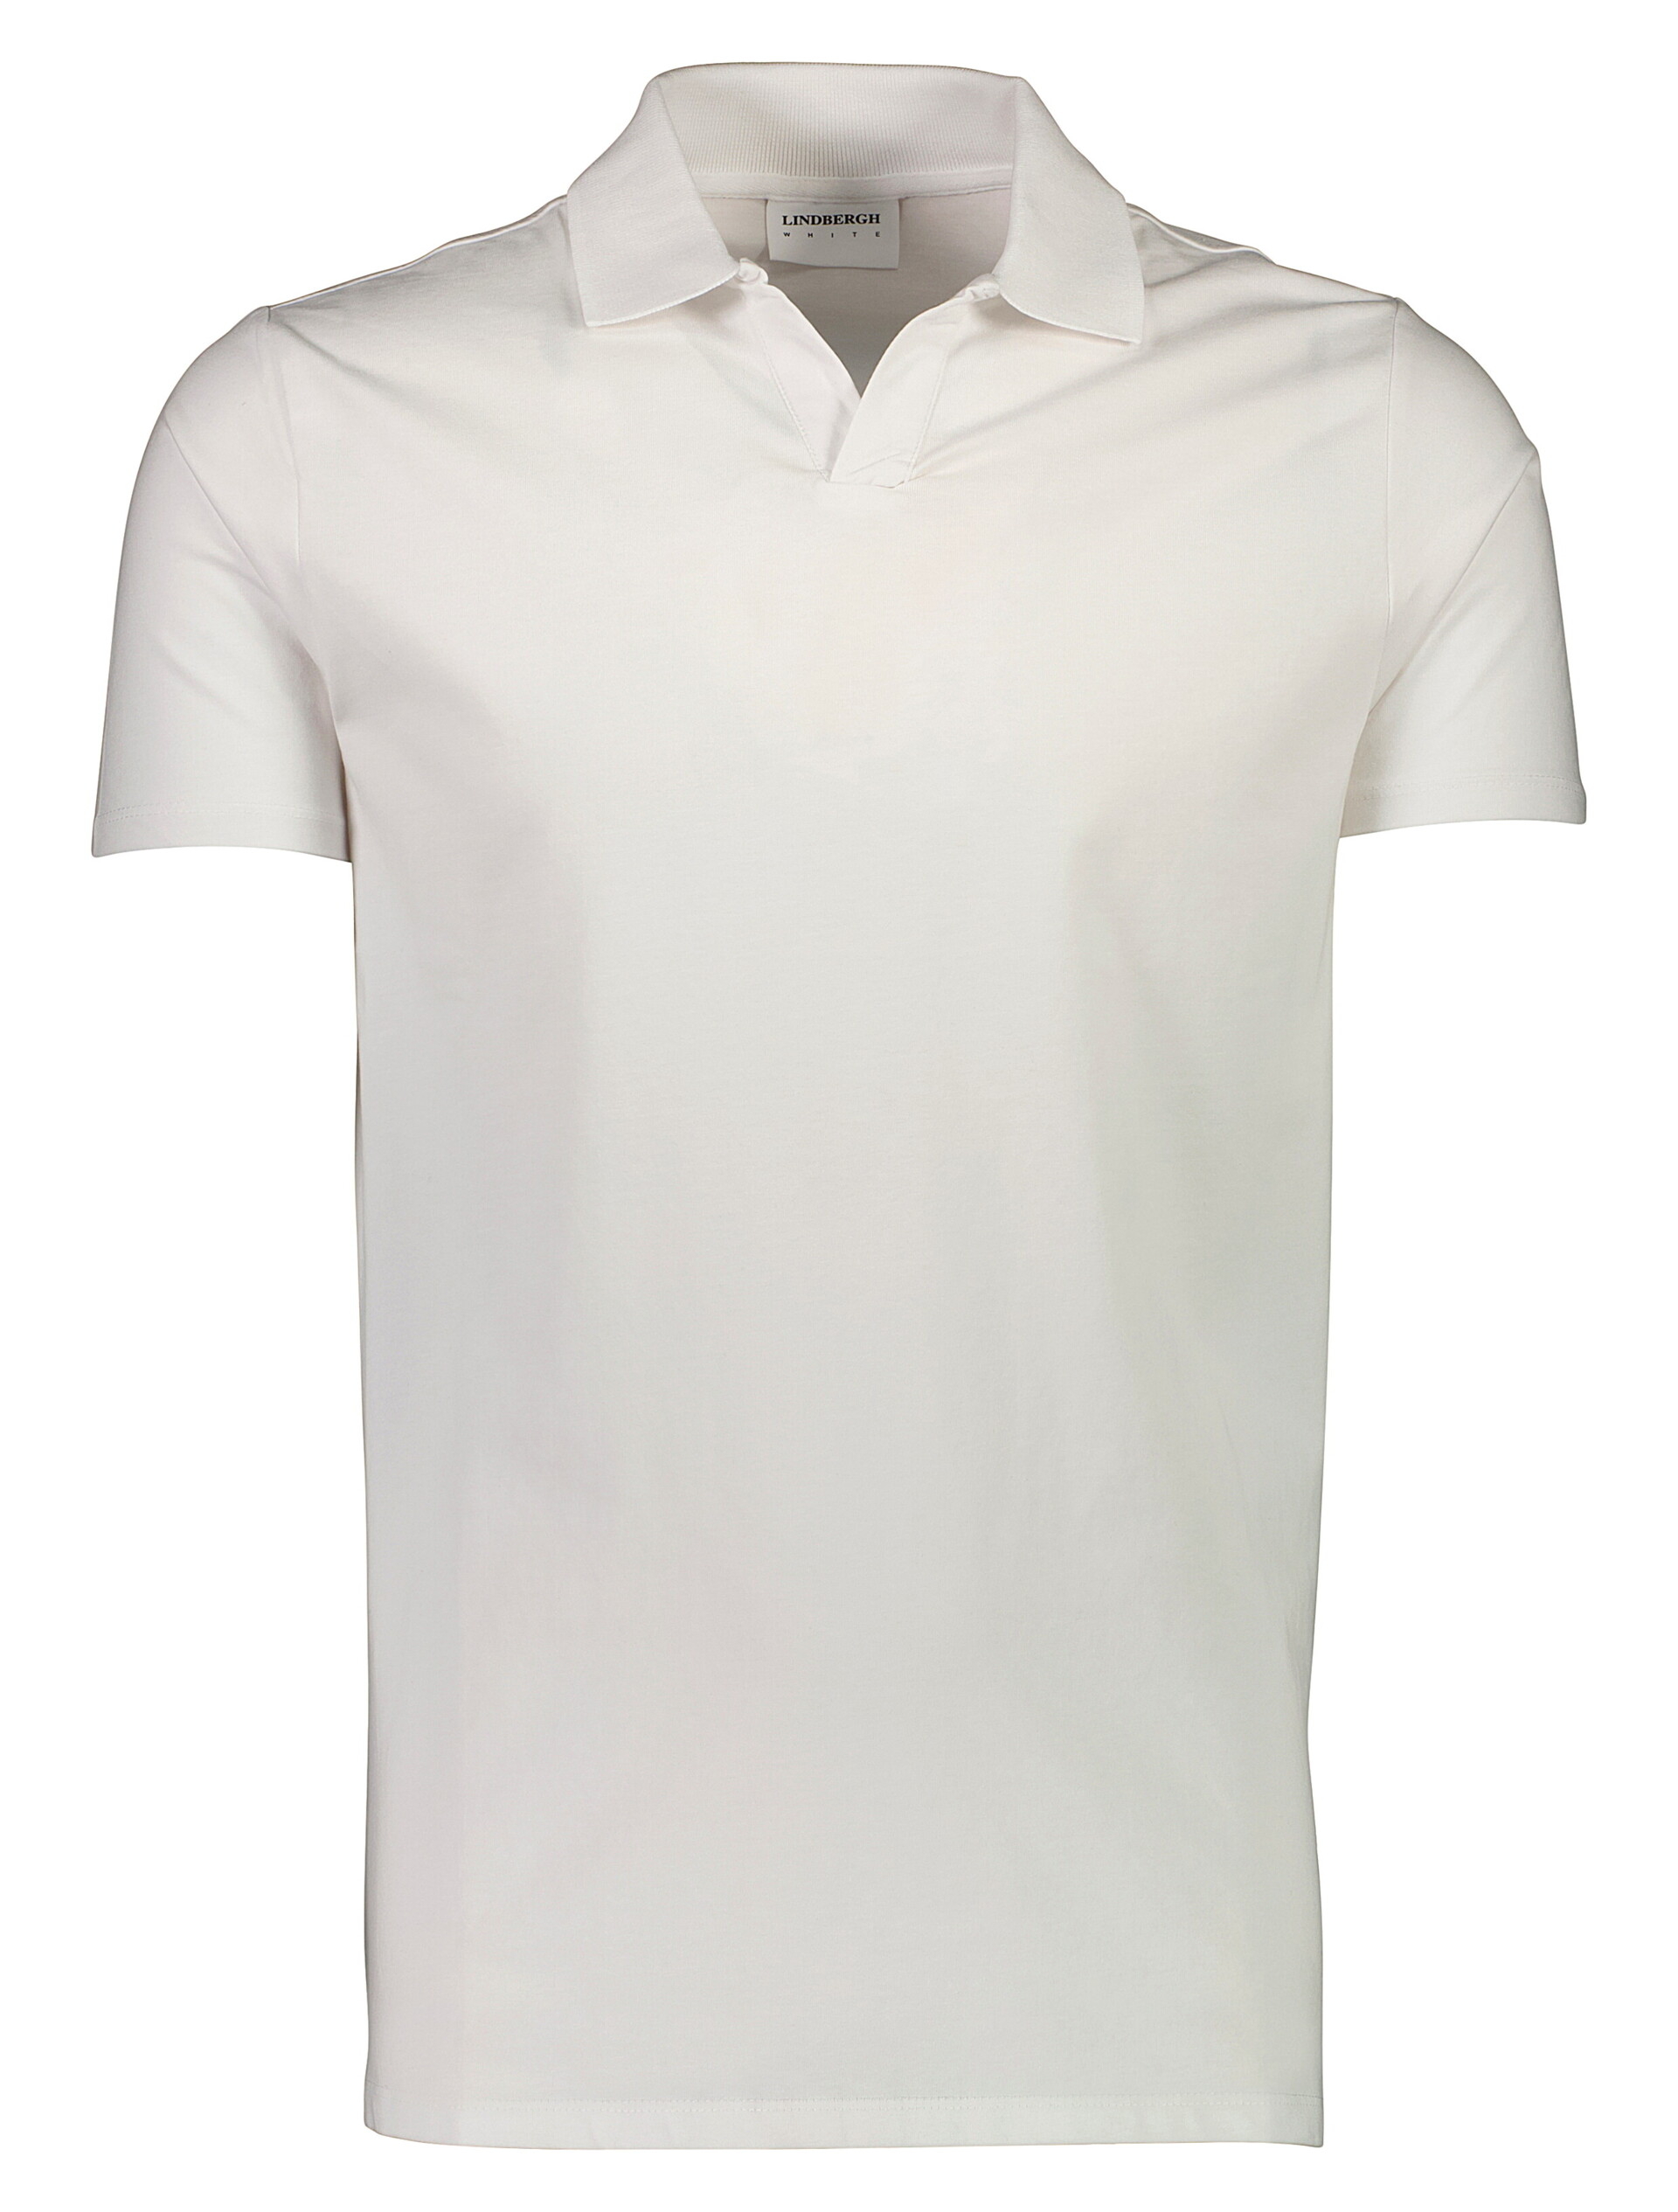 Lindbergh Polo shirt white / white